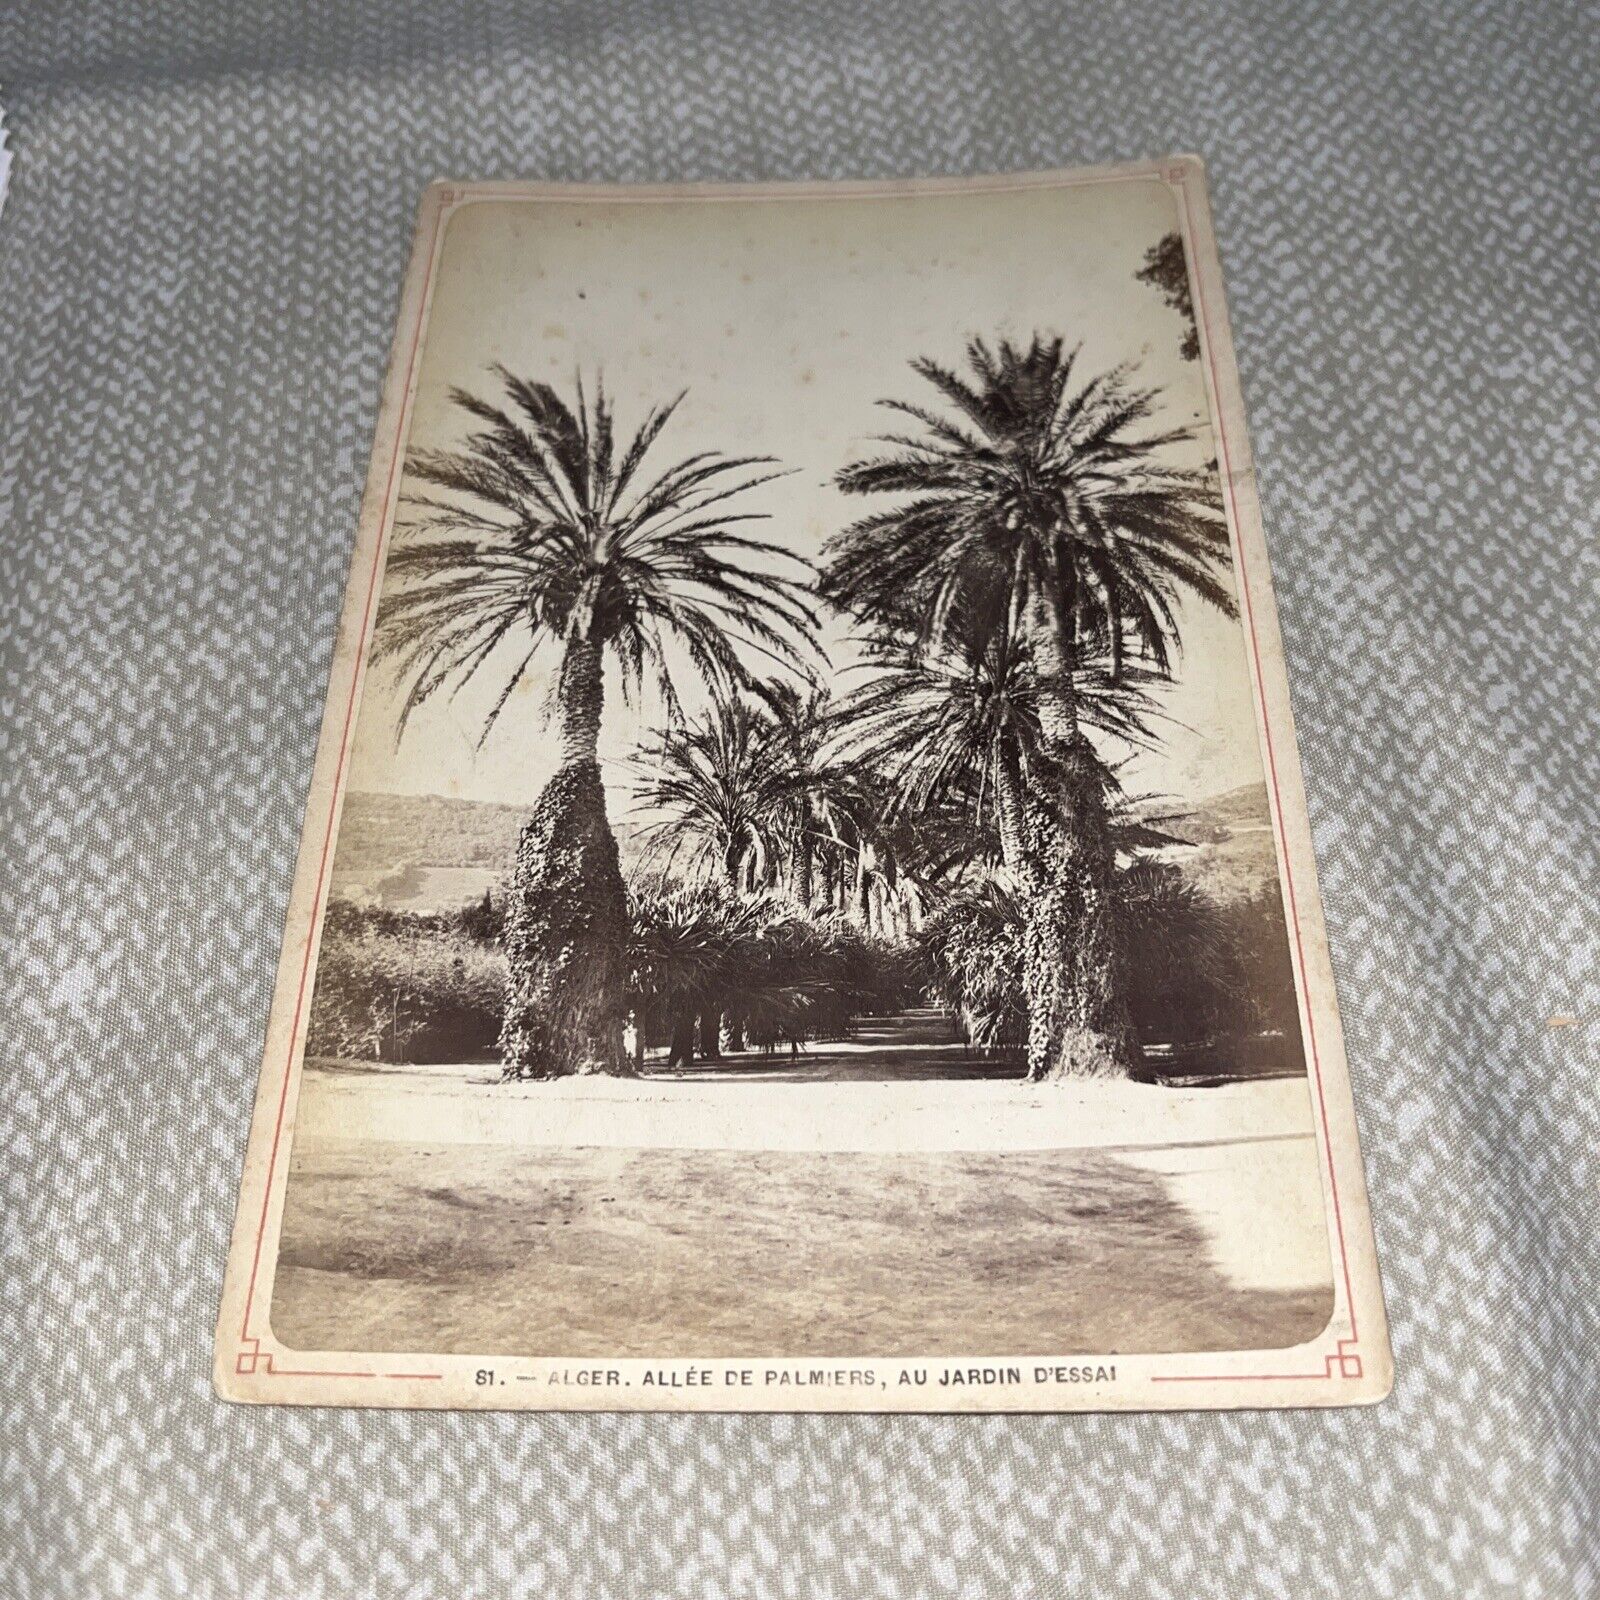 Antiq Cabinet Card Allee de Palmiers au Jardin d’essai Alger Algeria Test Garden